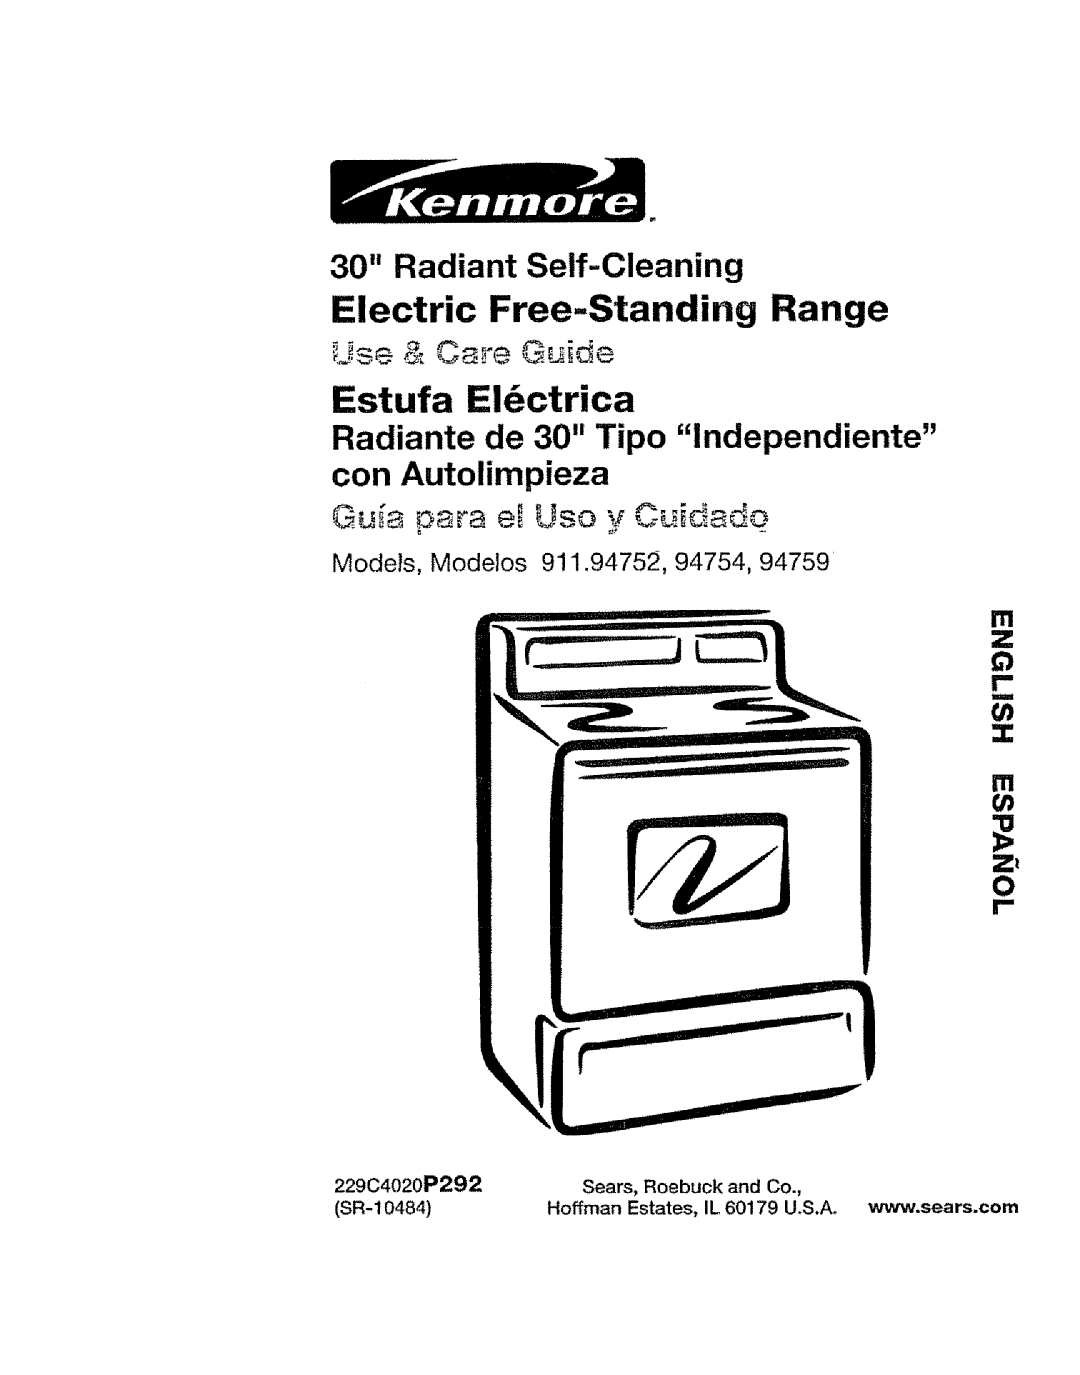 Kenmore 911.94752 manual Radiant Self=Cleaning, Estufa El_ctrica, Electric Free-StandingRange, _=e & Care, Ill I 